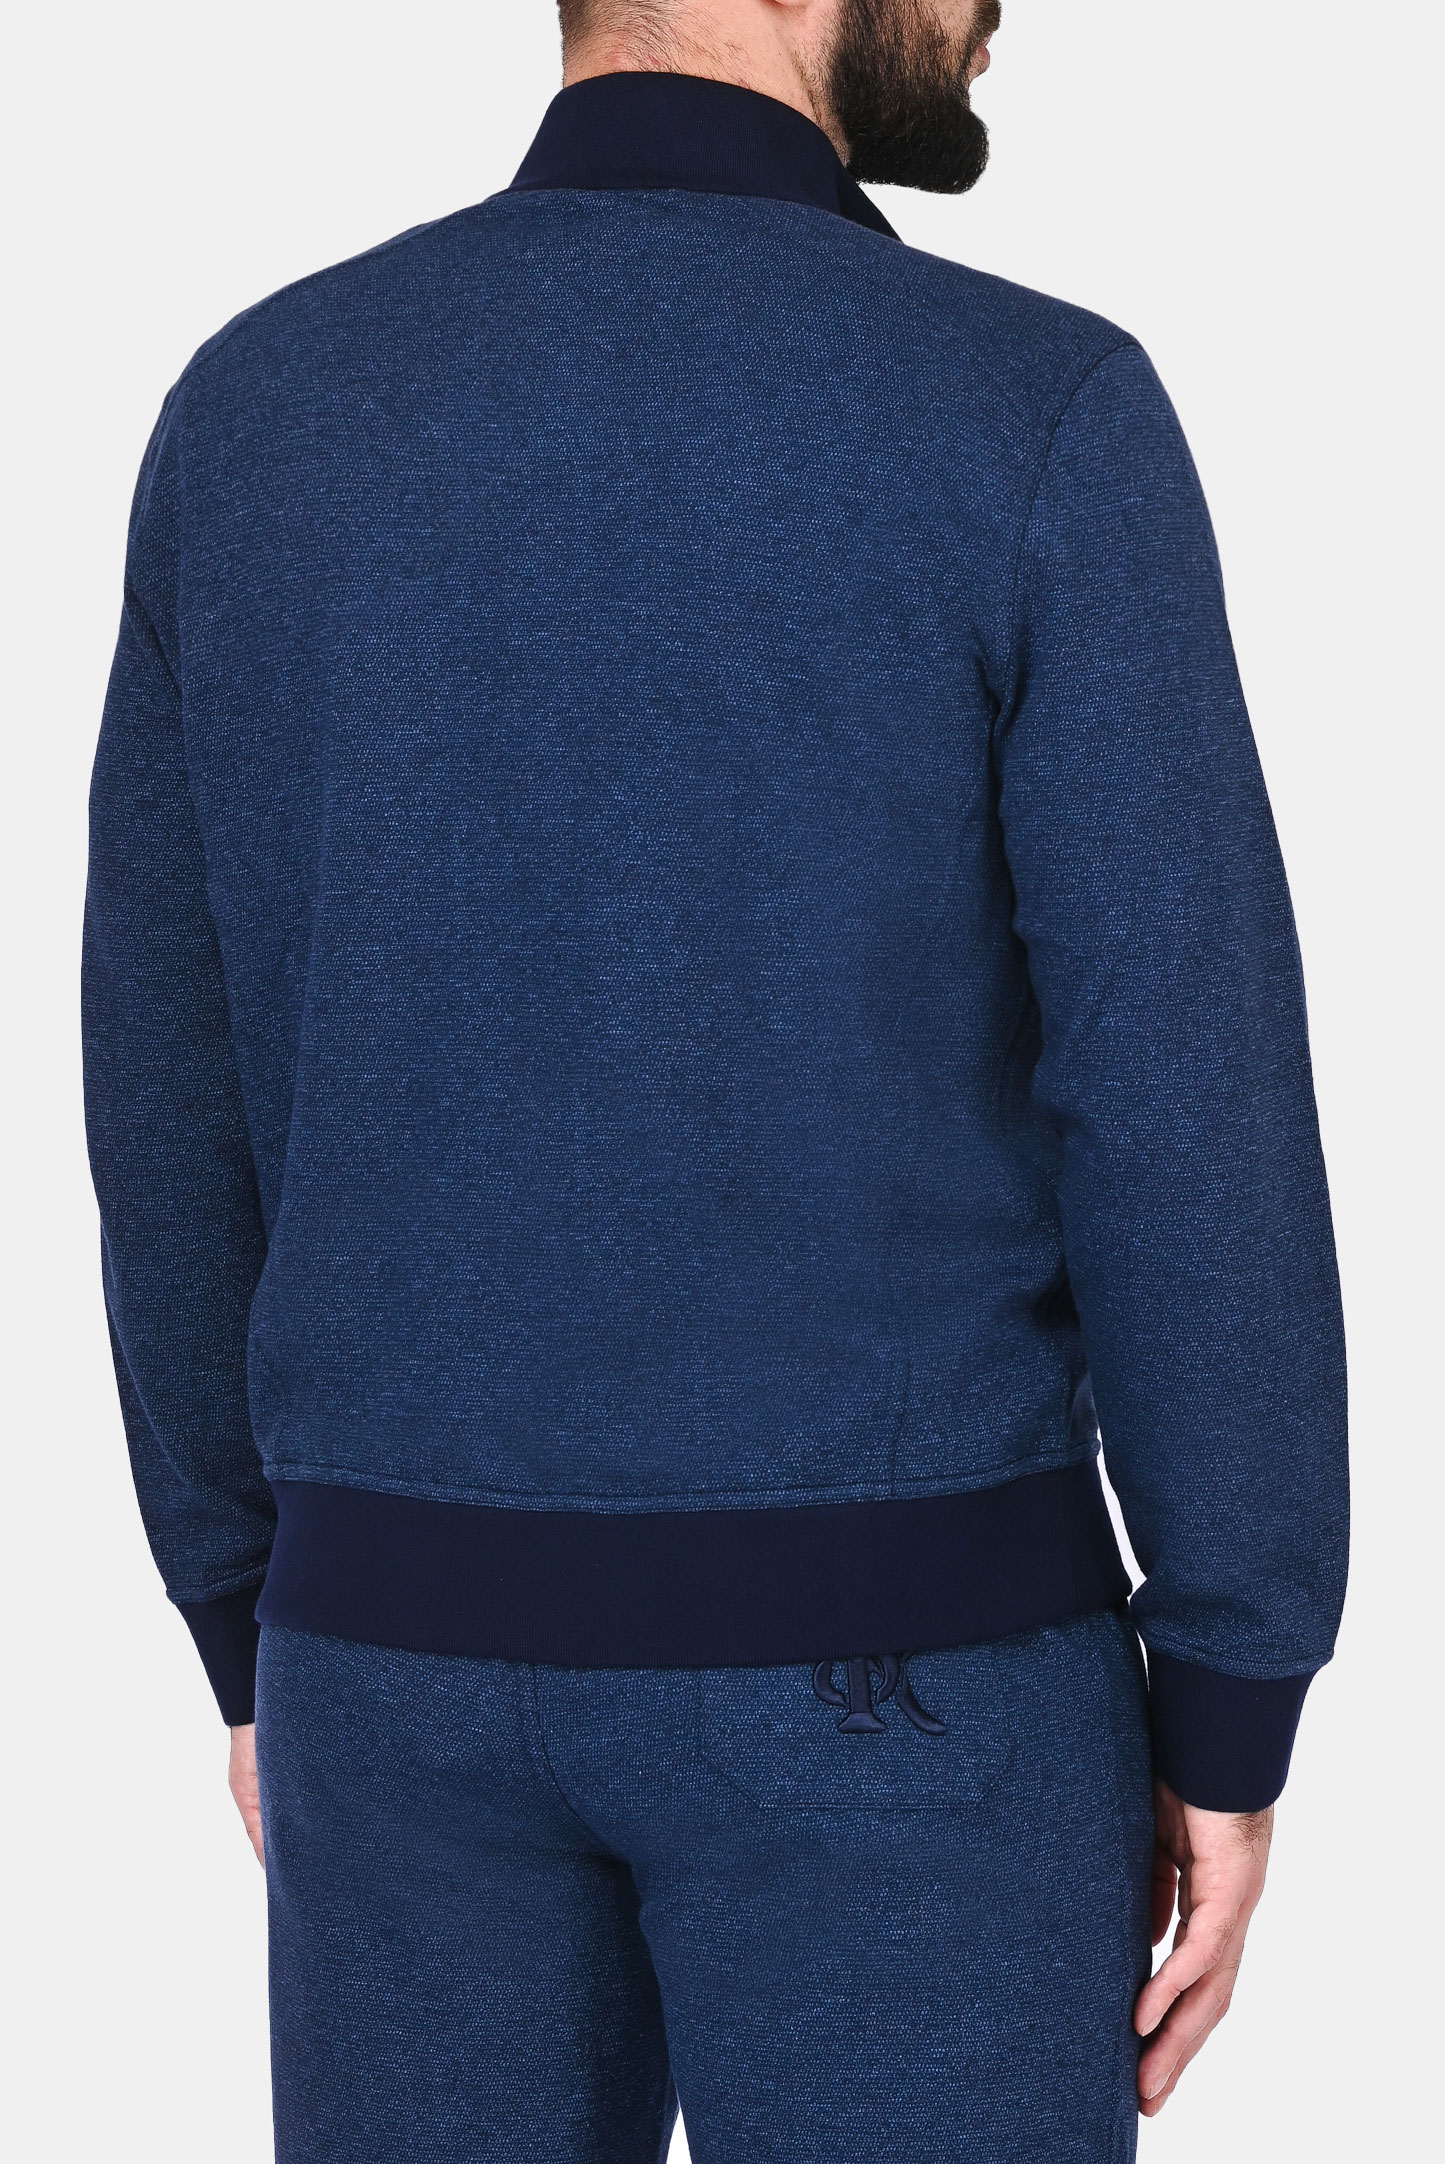 Куртка спорт (Кардиган) STEFANO RICCI K919029R31 T21410, цвет: Синий, Мужской